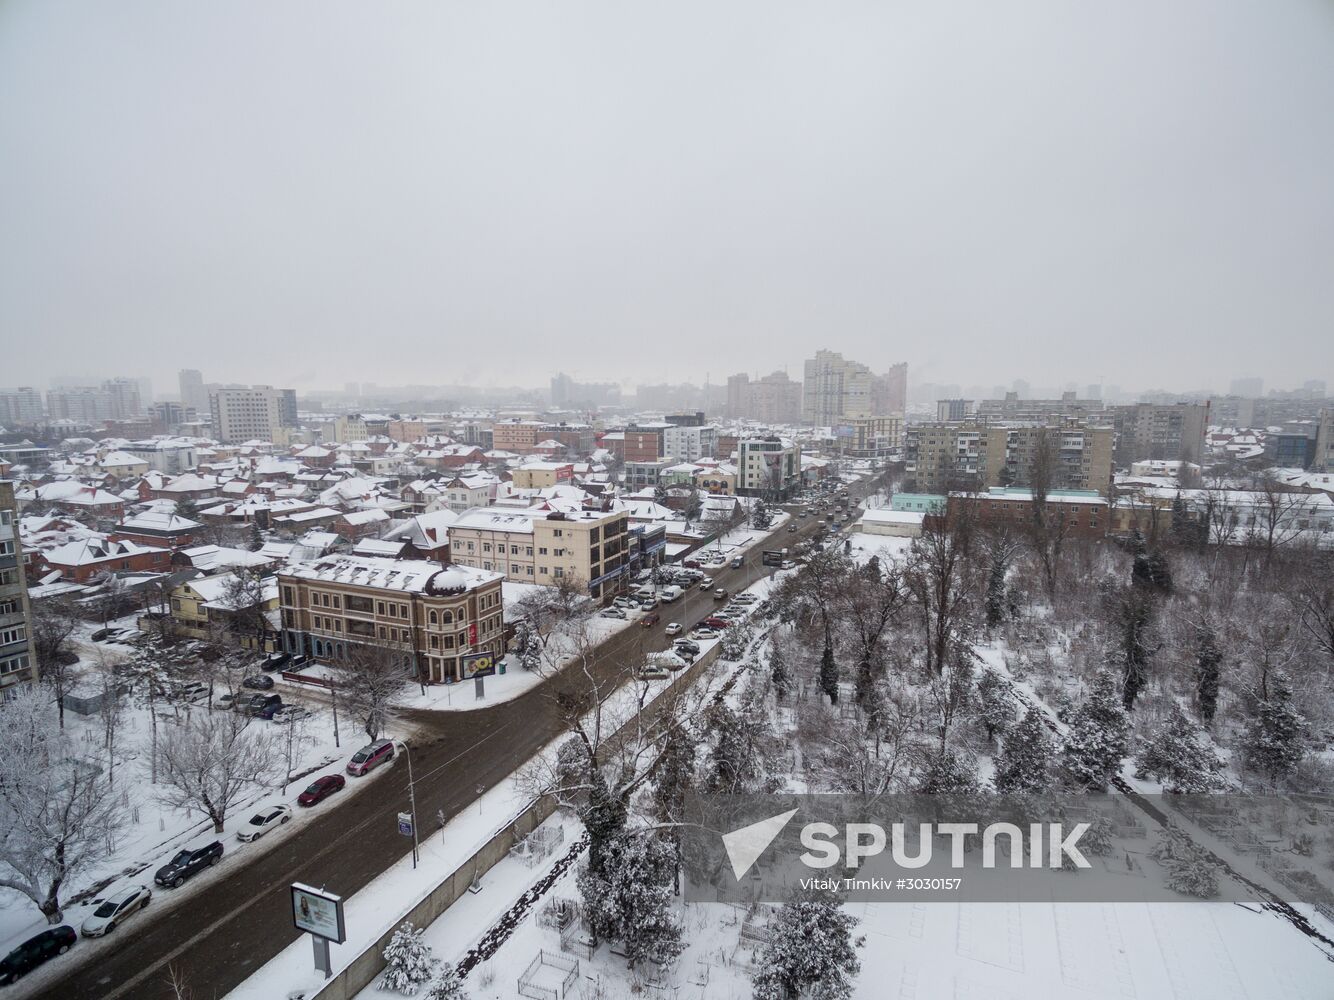 Winter in Krasnodar